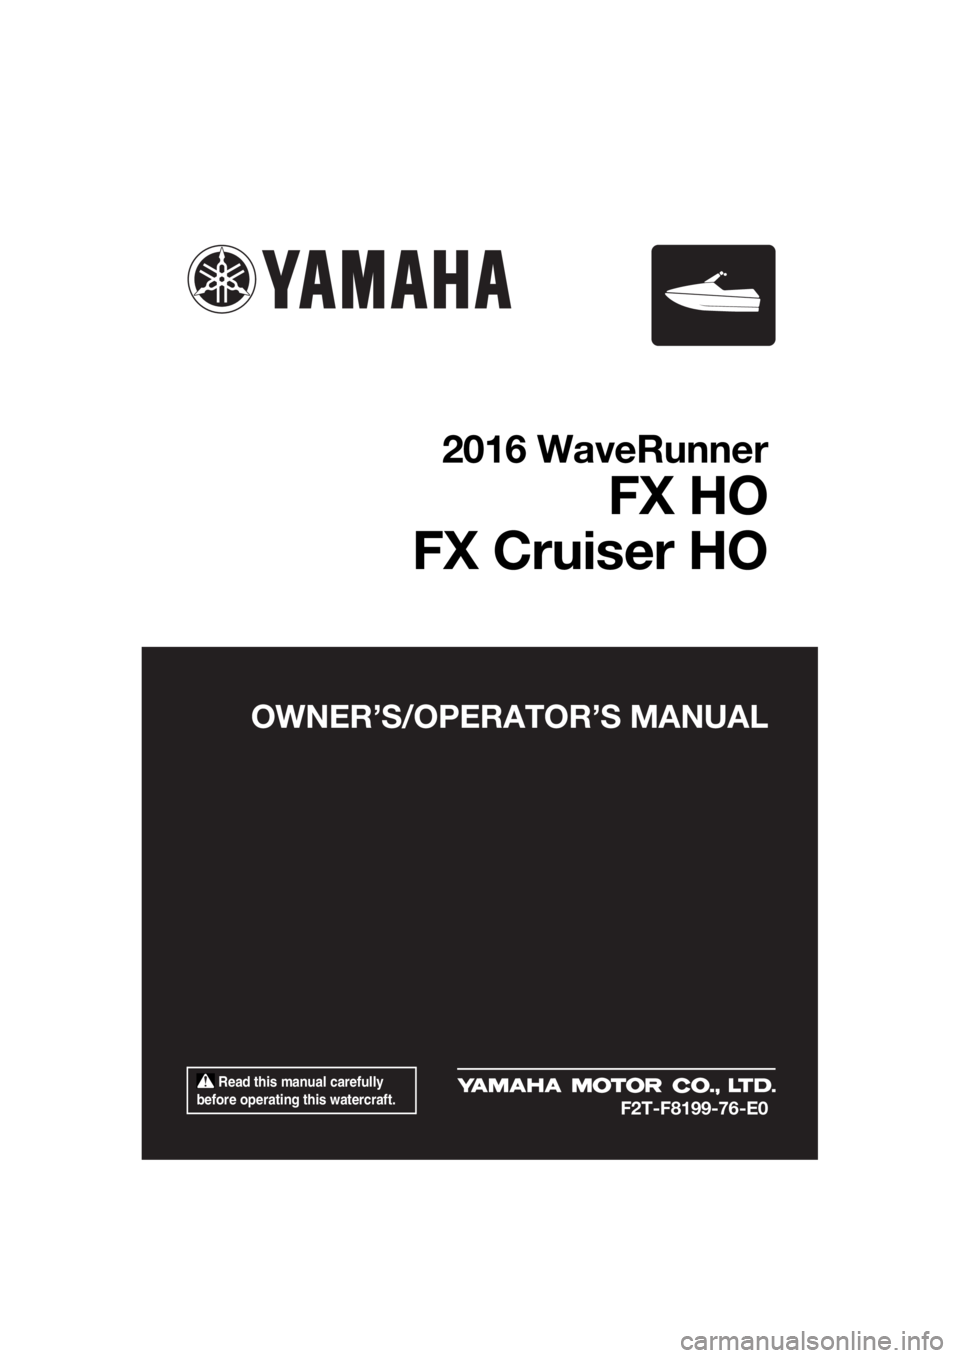 YAMAHA FX HO 2016  Owners Manual 